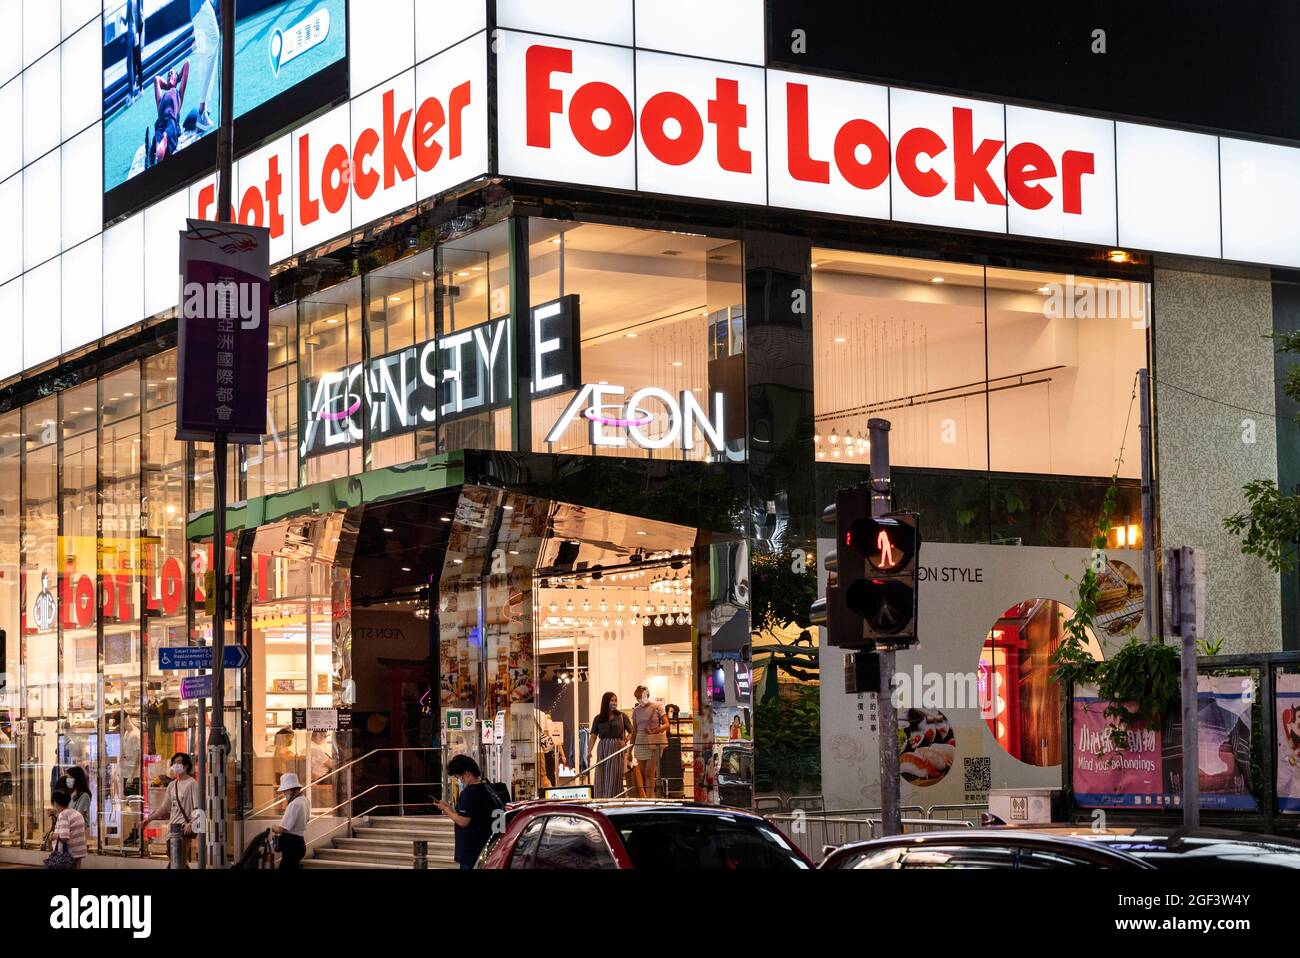 American multinational sportswear and footwear retailer, Foot Locker store seen in Hong Kong. Stock Photo